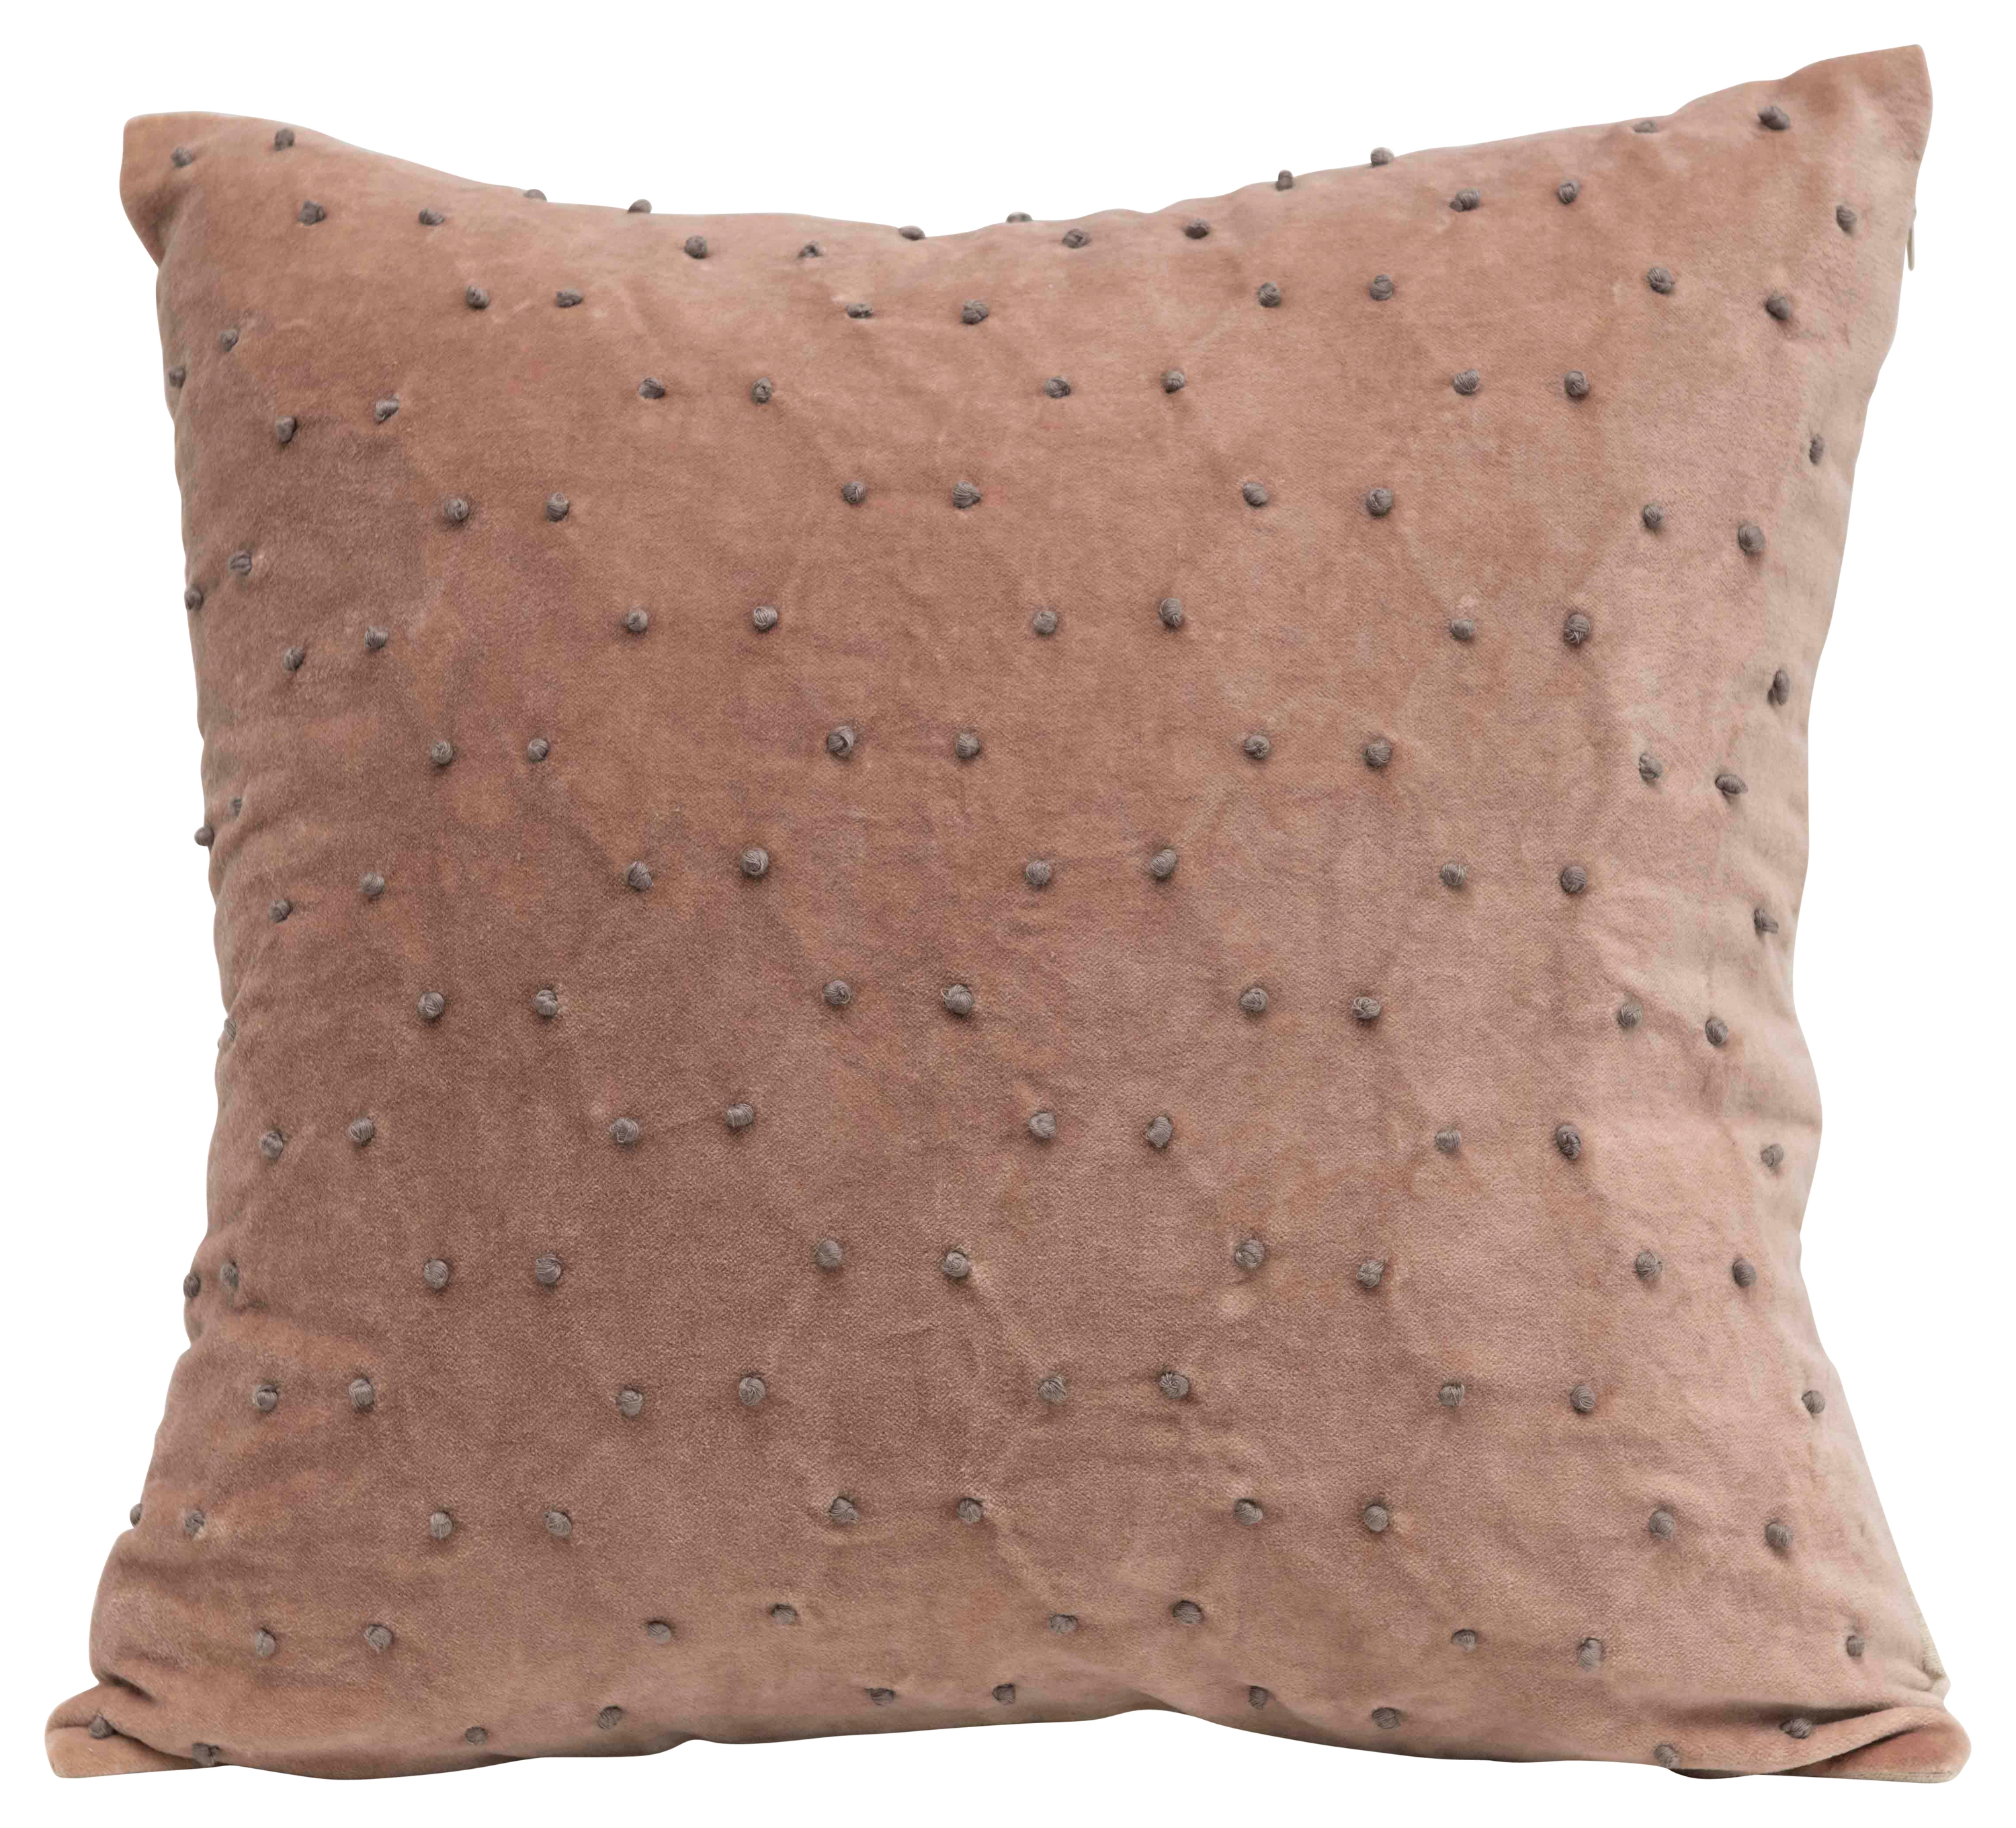 Reversible Square Polka Dot Cotton Velvet Pillow with Solid Back - Image 0